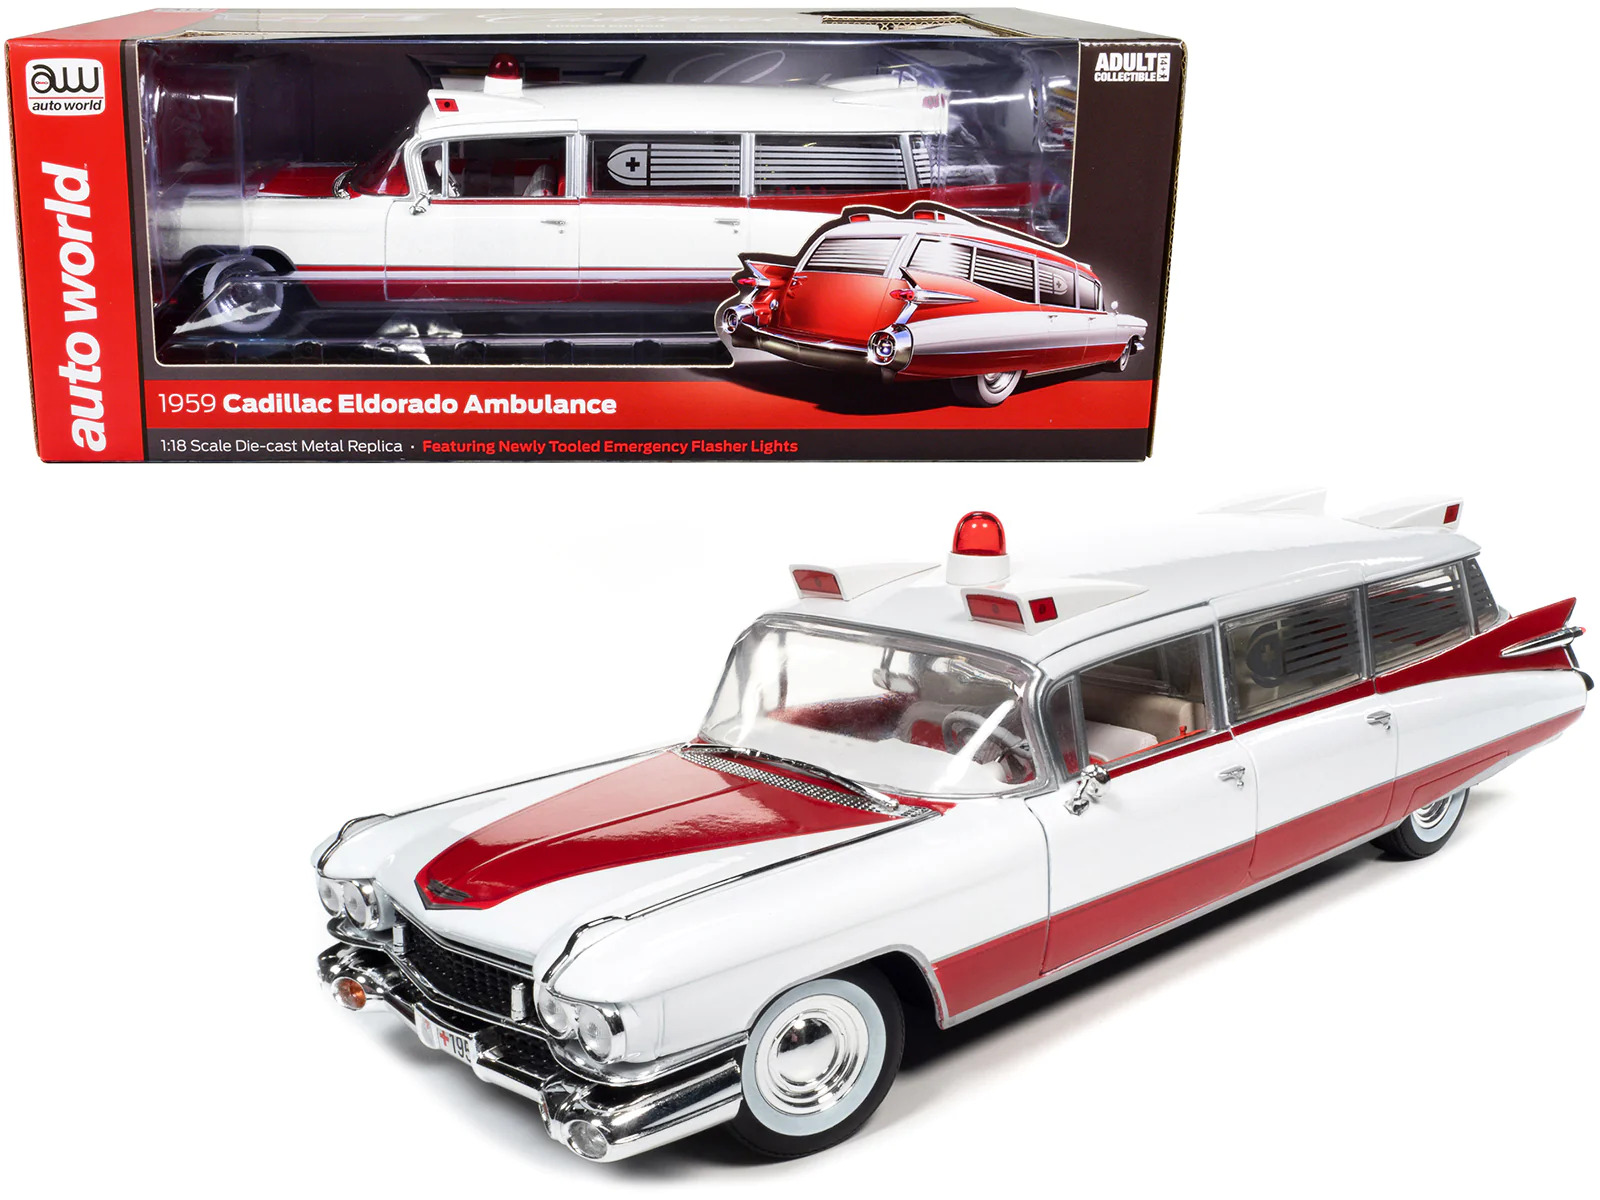 1959 Cadillac Eldorado Ambulance Red and White 1/18 Diecast Model